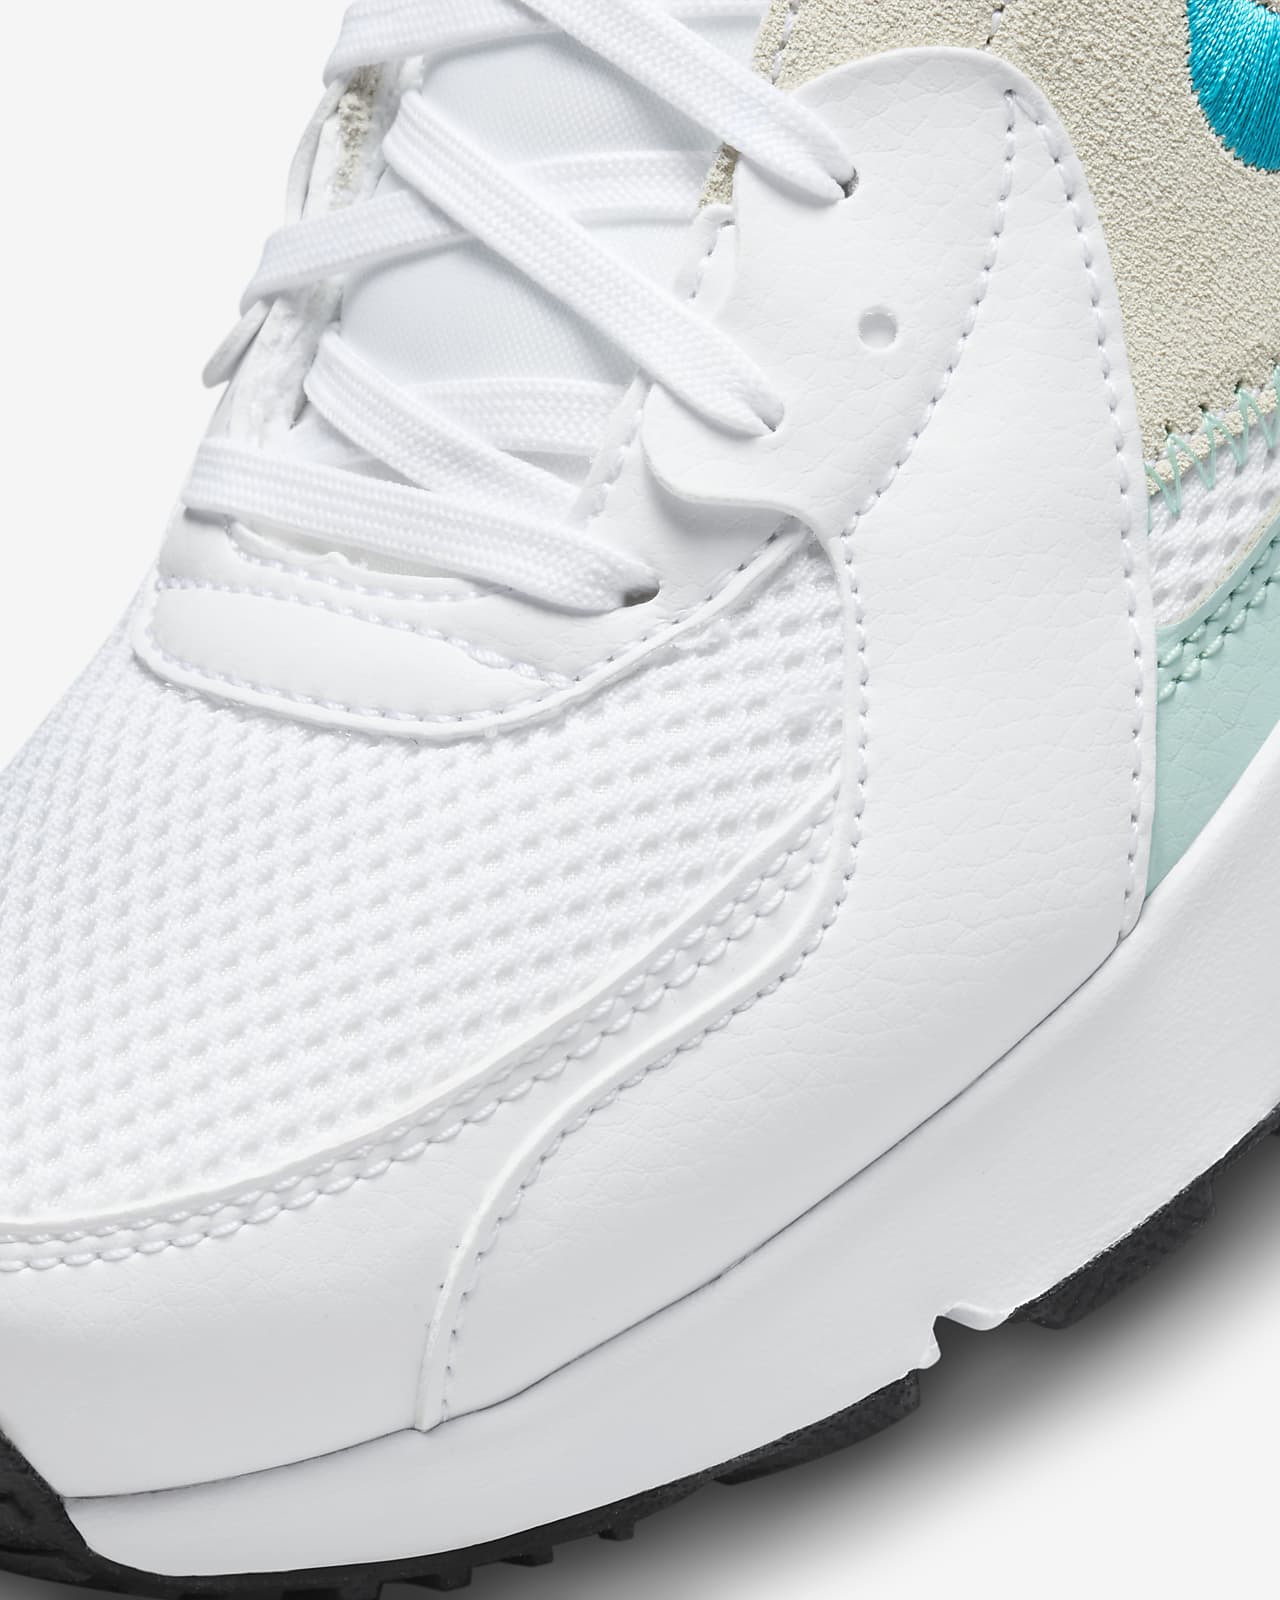 Nike - Zapatillas Air Max Exceed para mujer, negro/blanco/gris